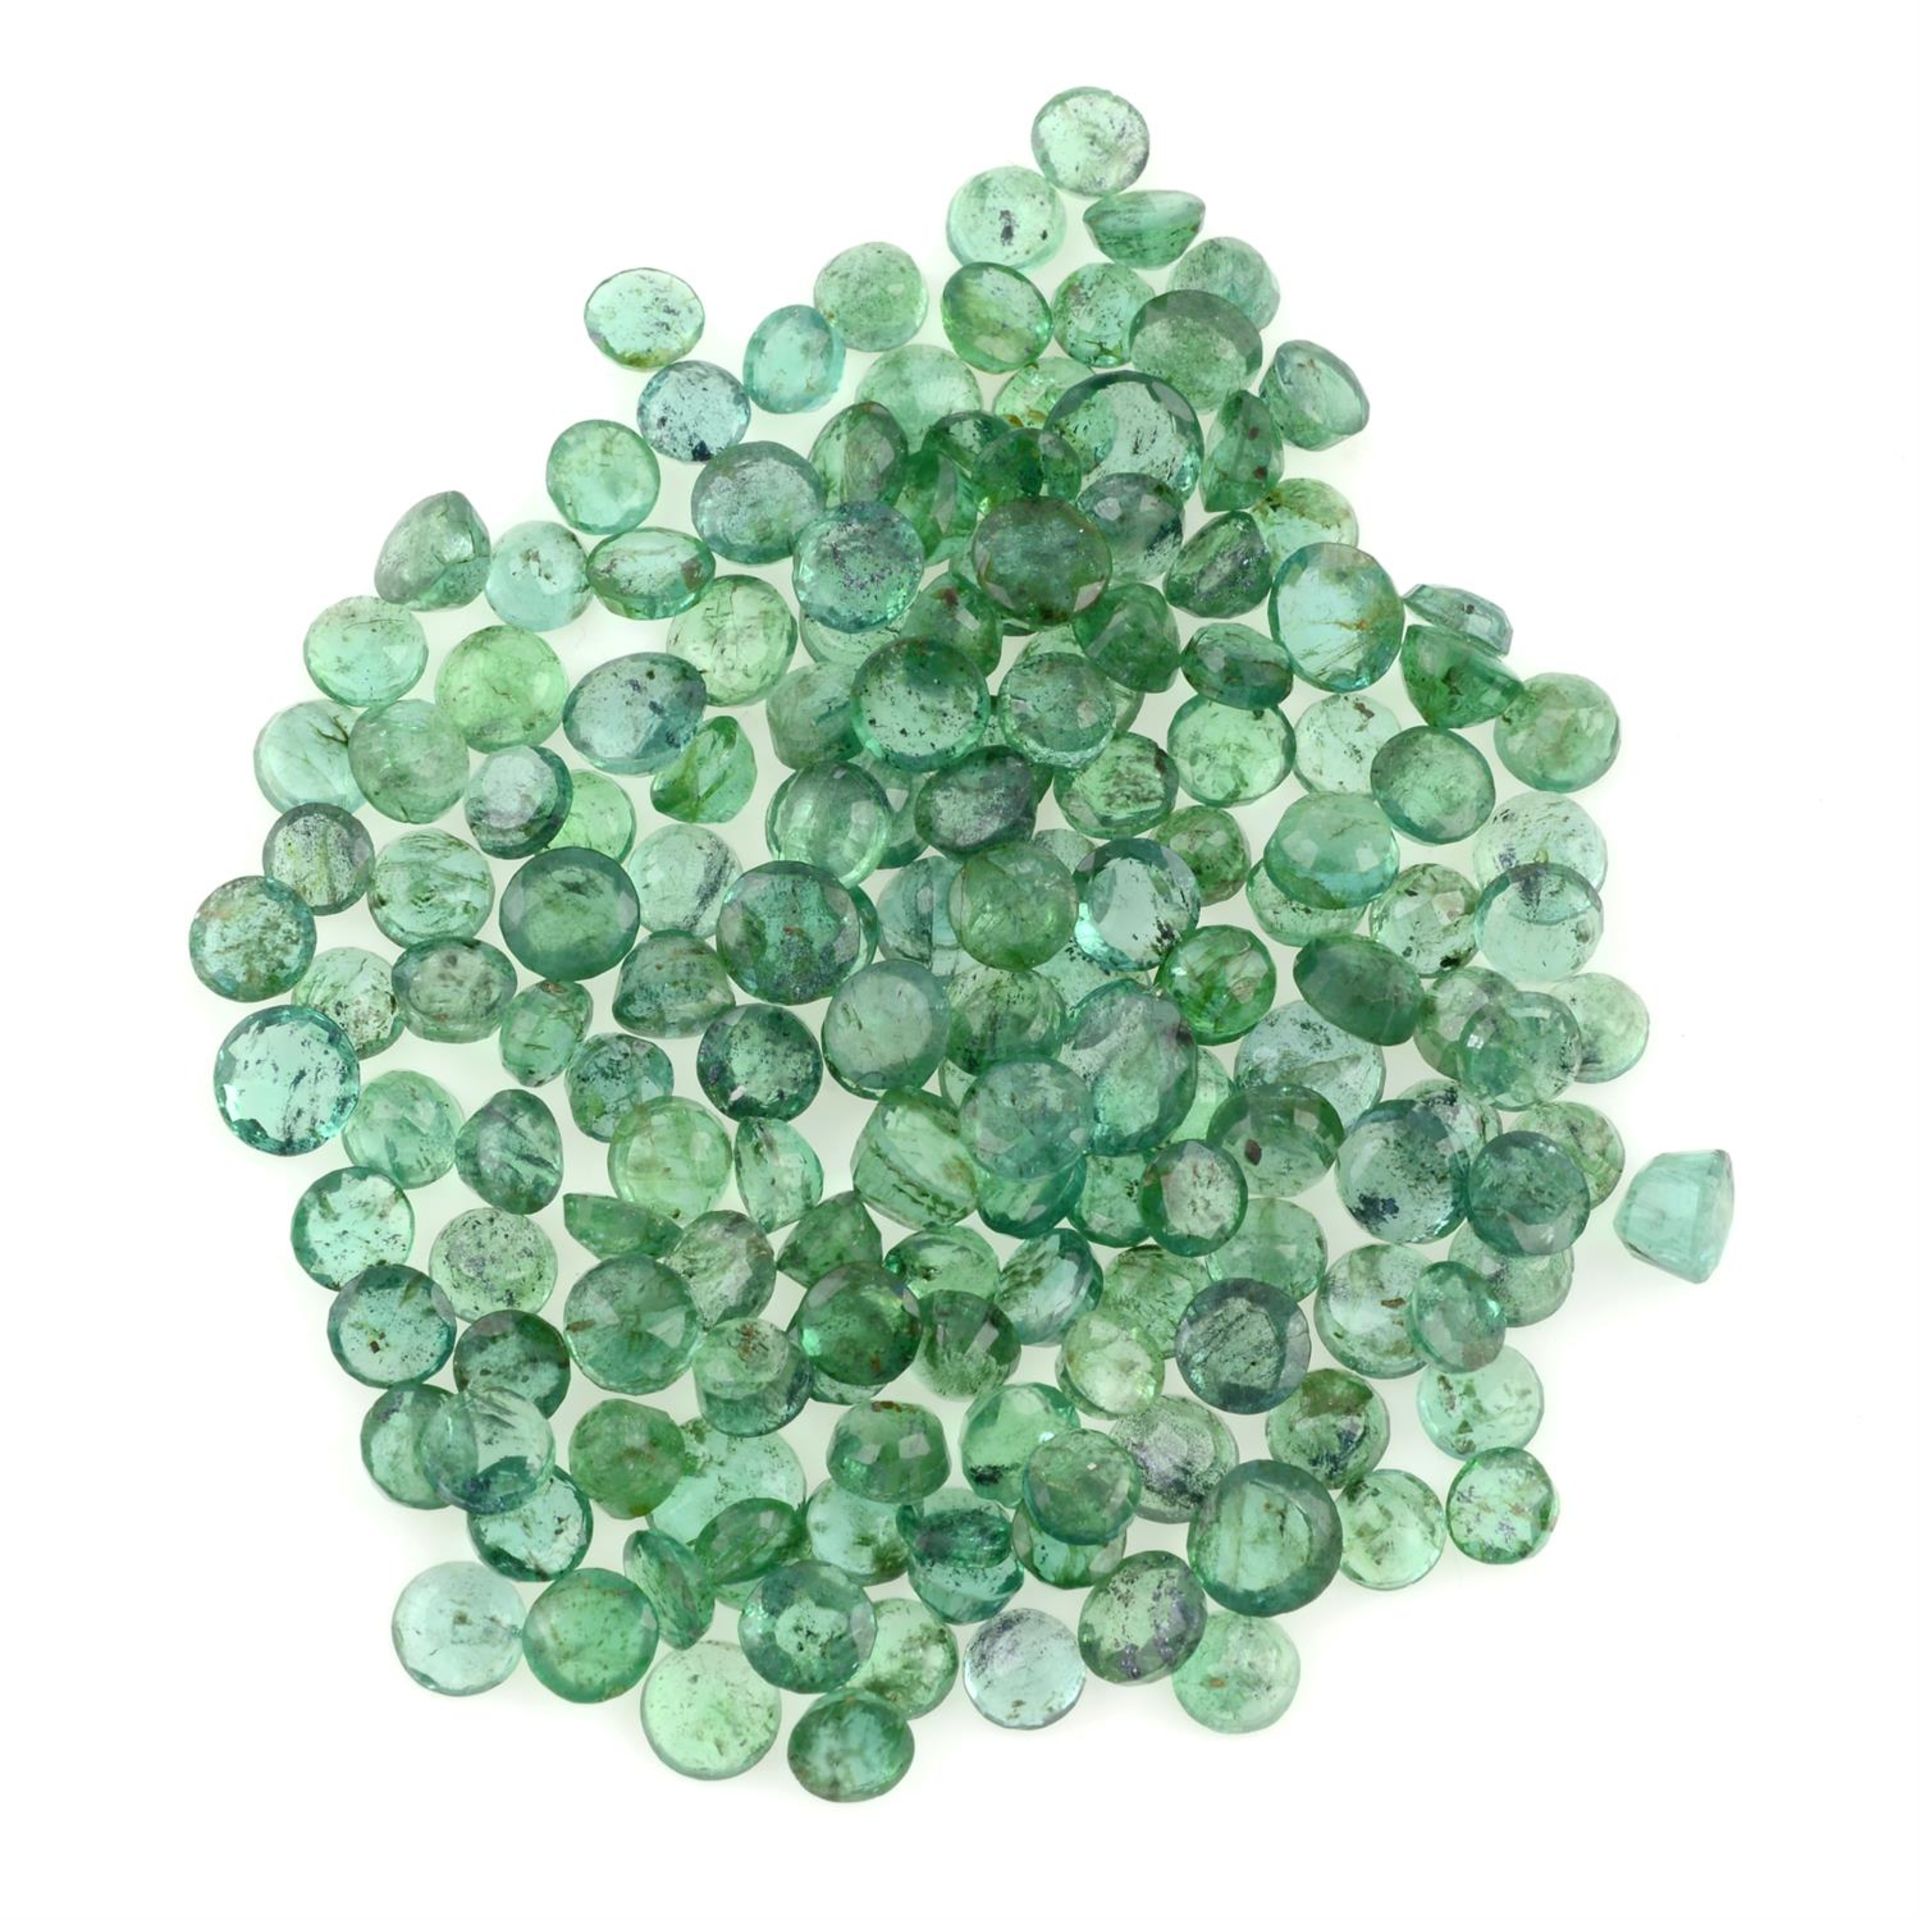 Circular-shape emeralds, 26.17ct